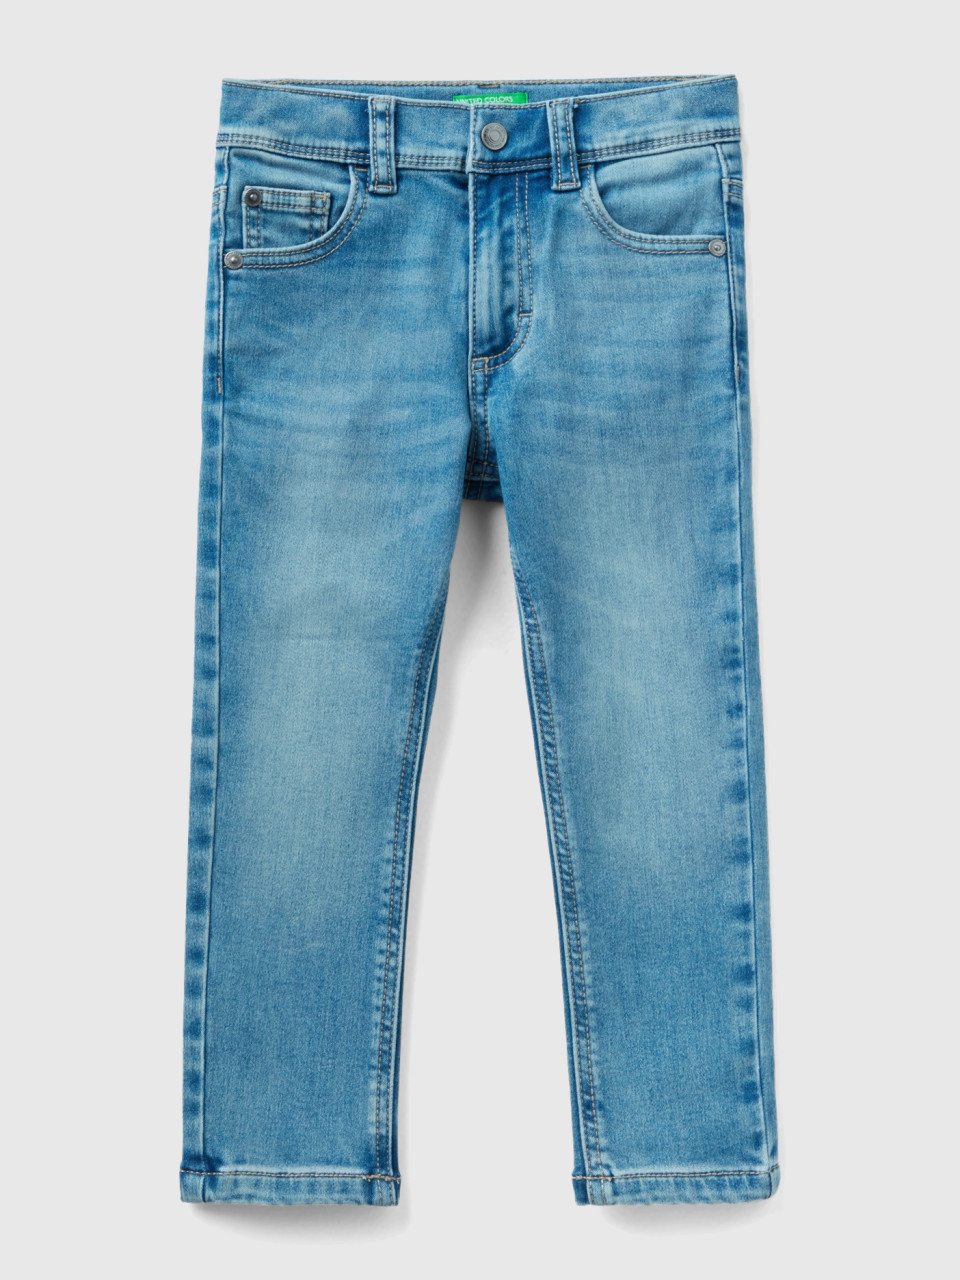 Benetton, Thermo-jeans Skinny Fit, Azurblau, male